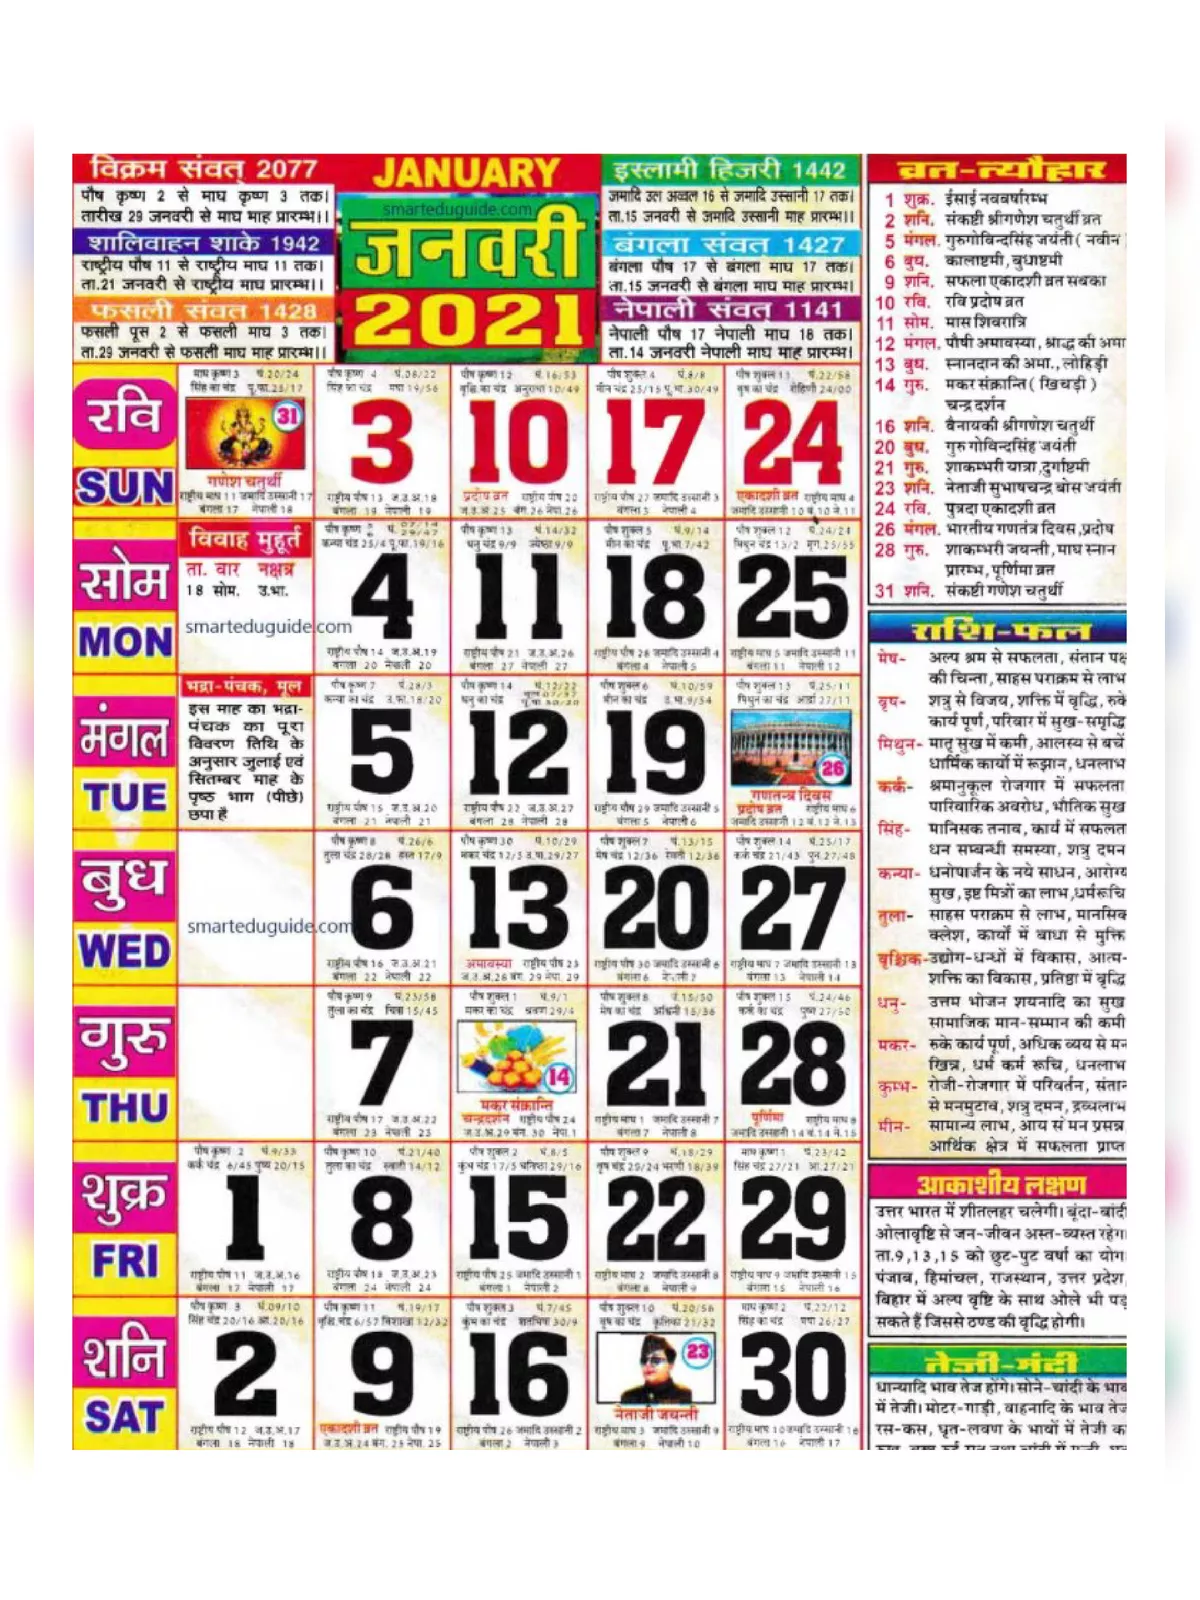 ठाकुर प्रसाद कैलेंडर 2021 – Thakur Prasad Calendar 2021